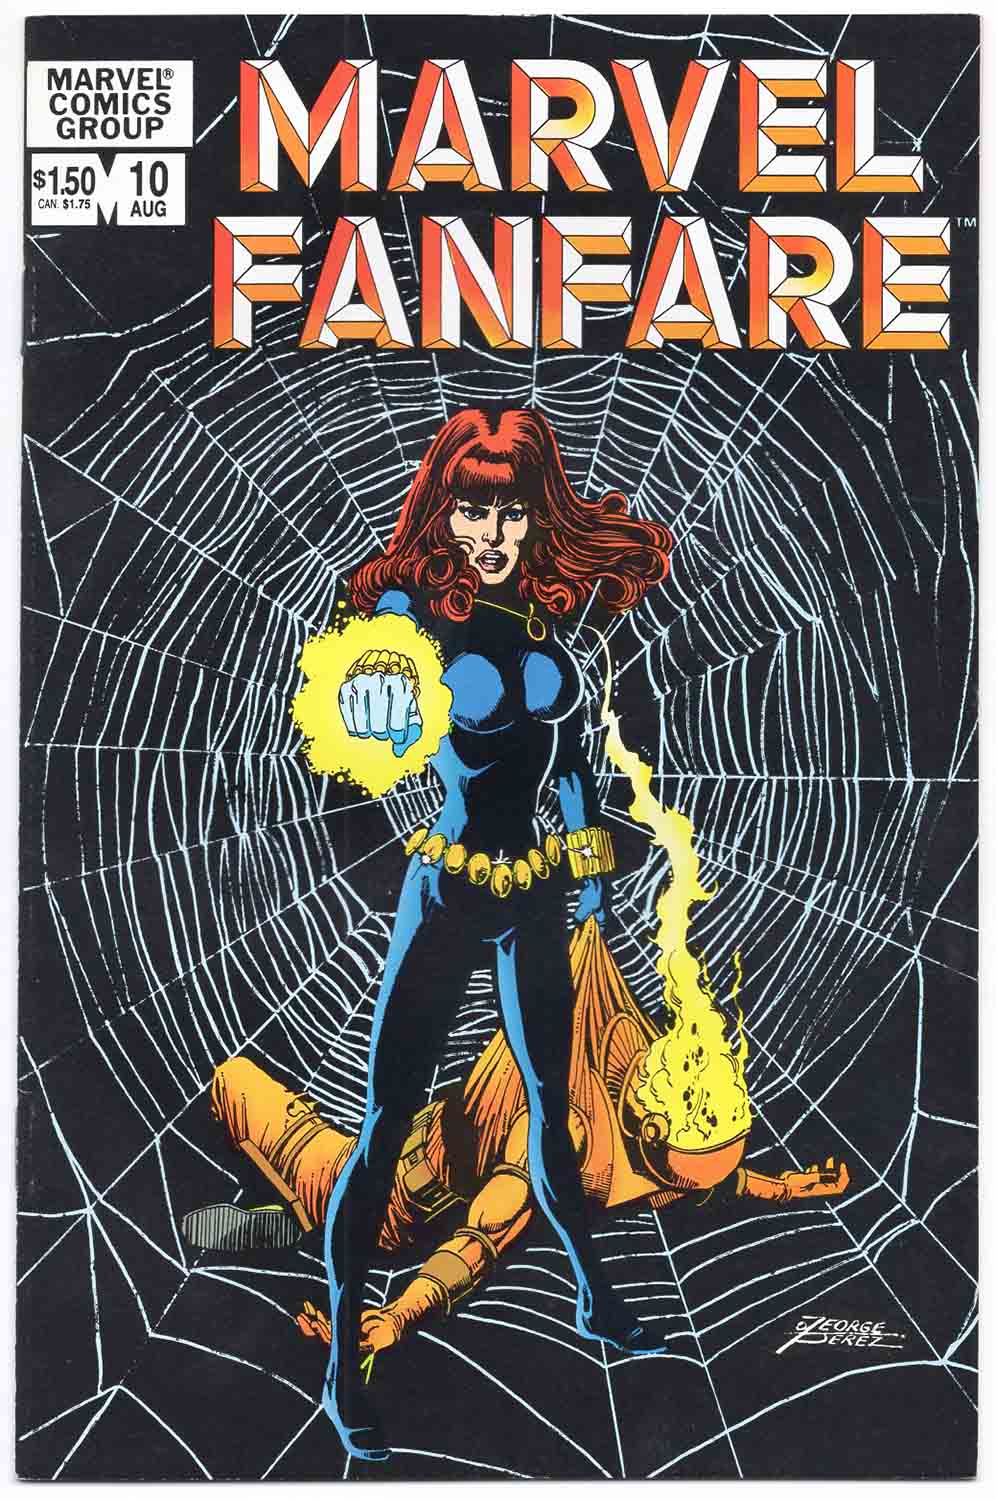 Marvel Fanfare #10